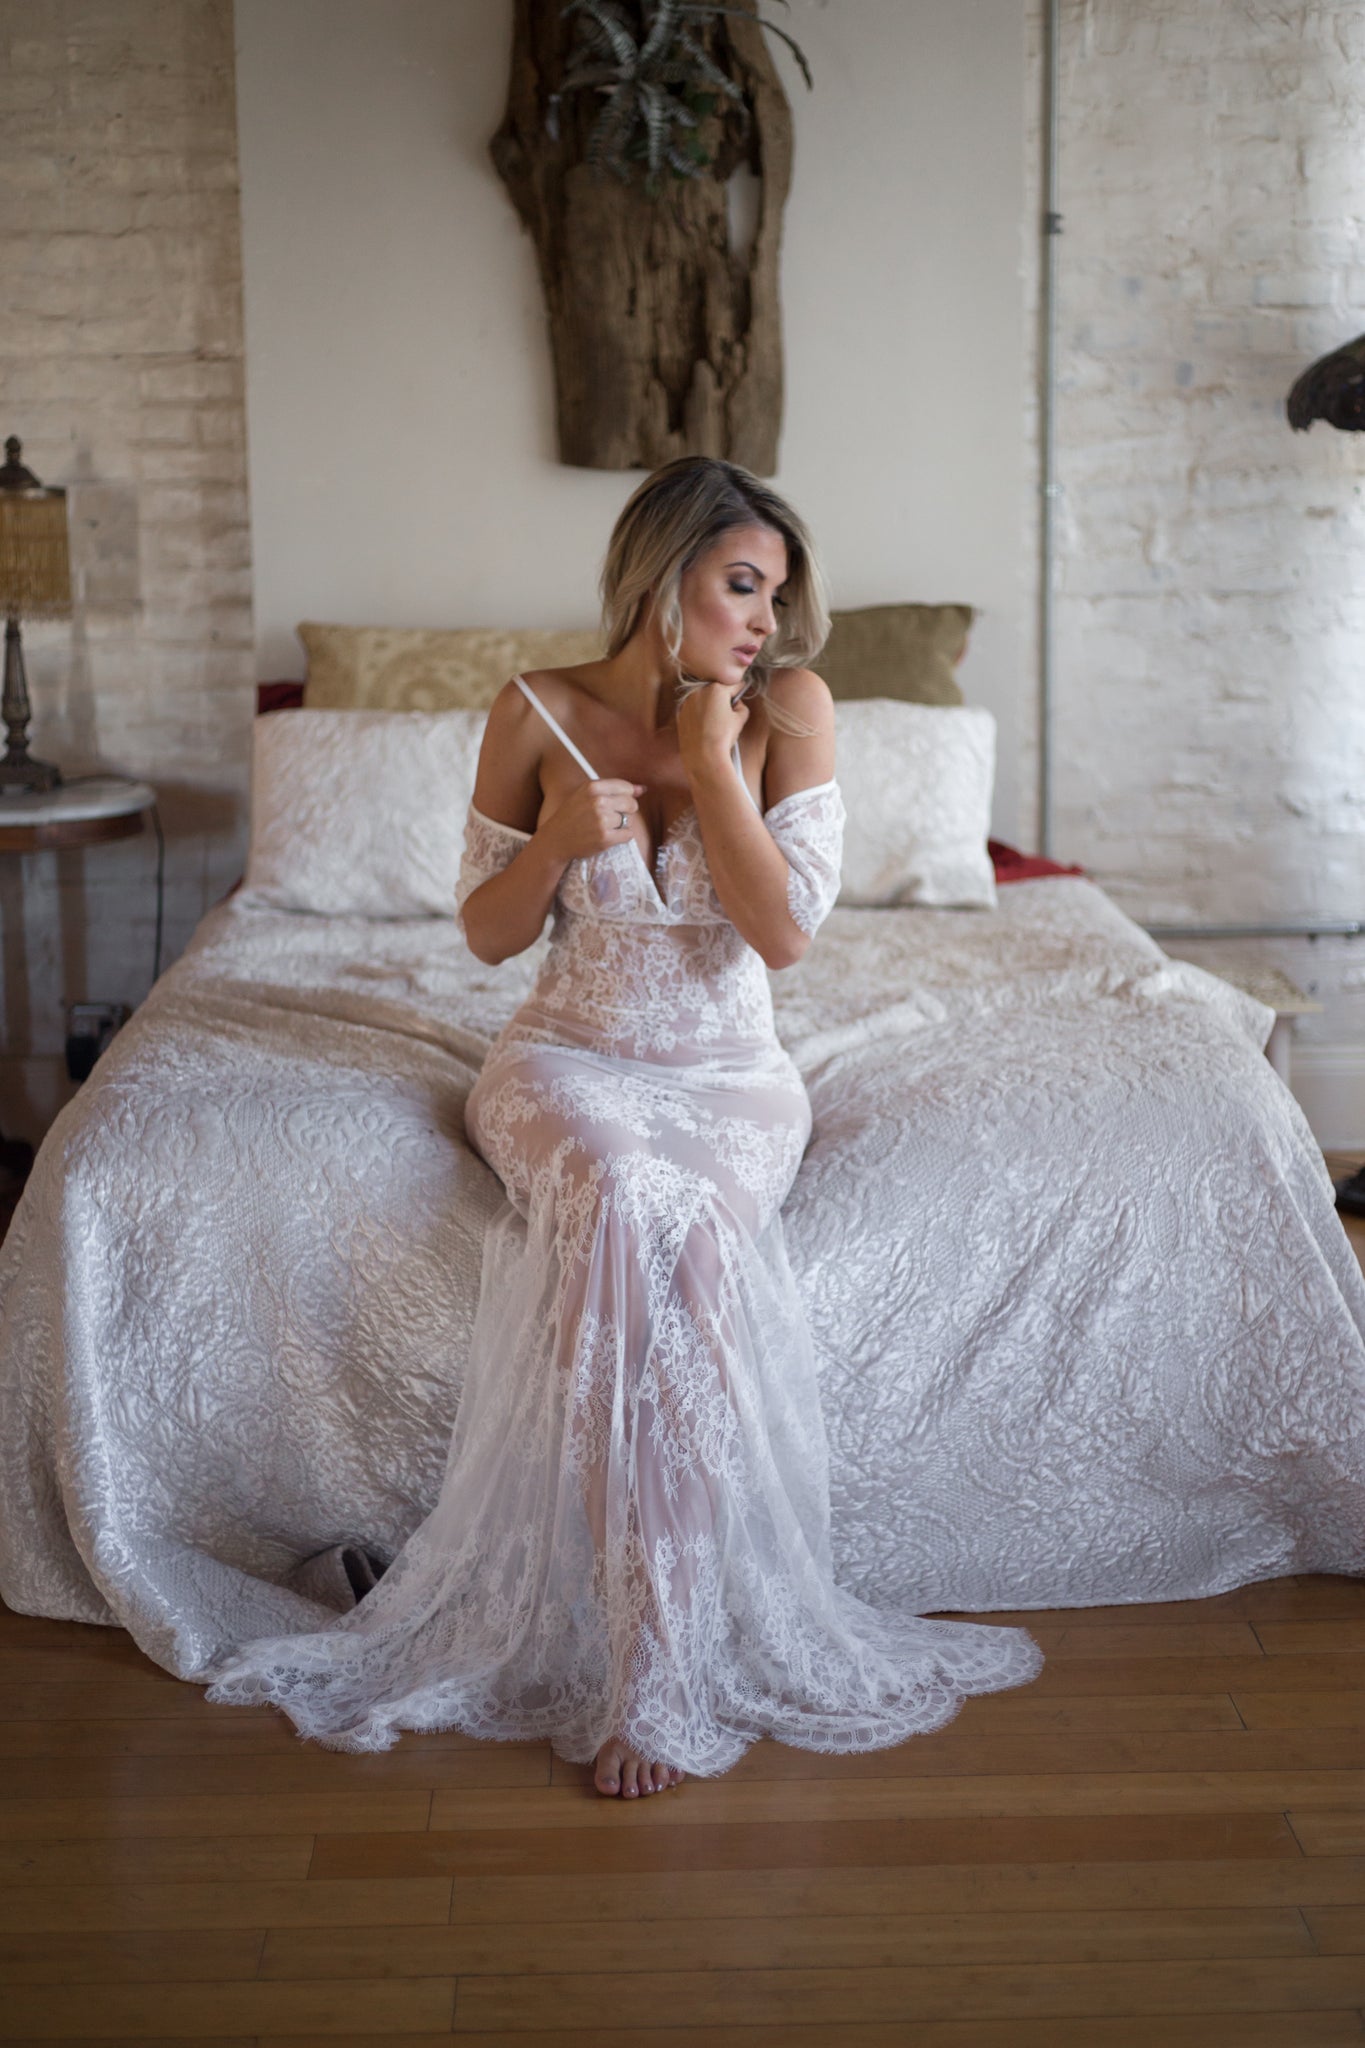 sheer lingerie gown for bride